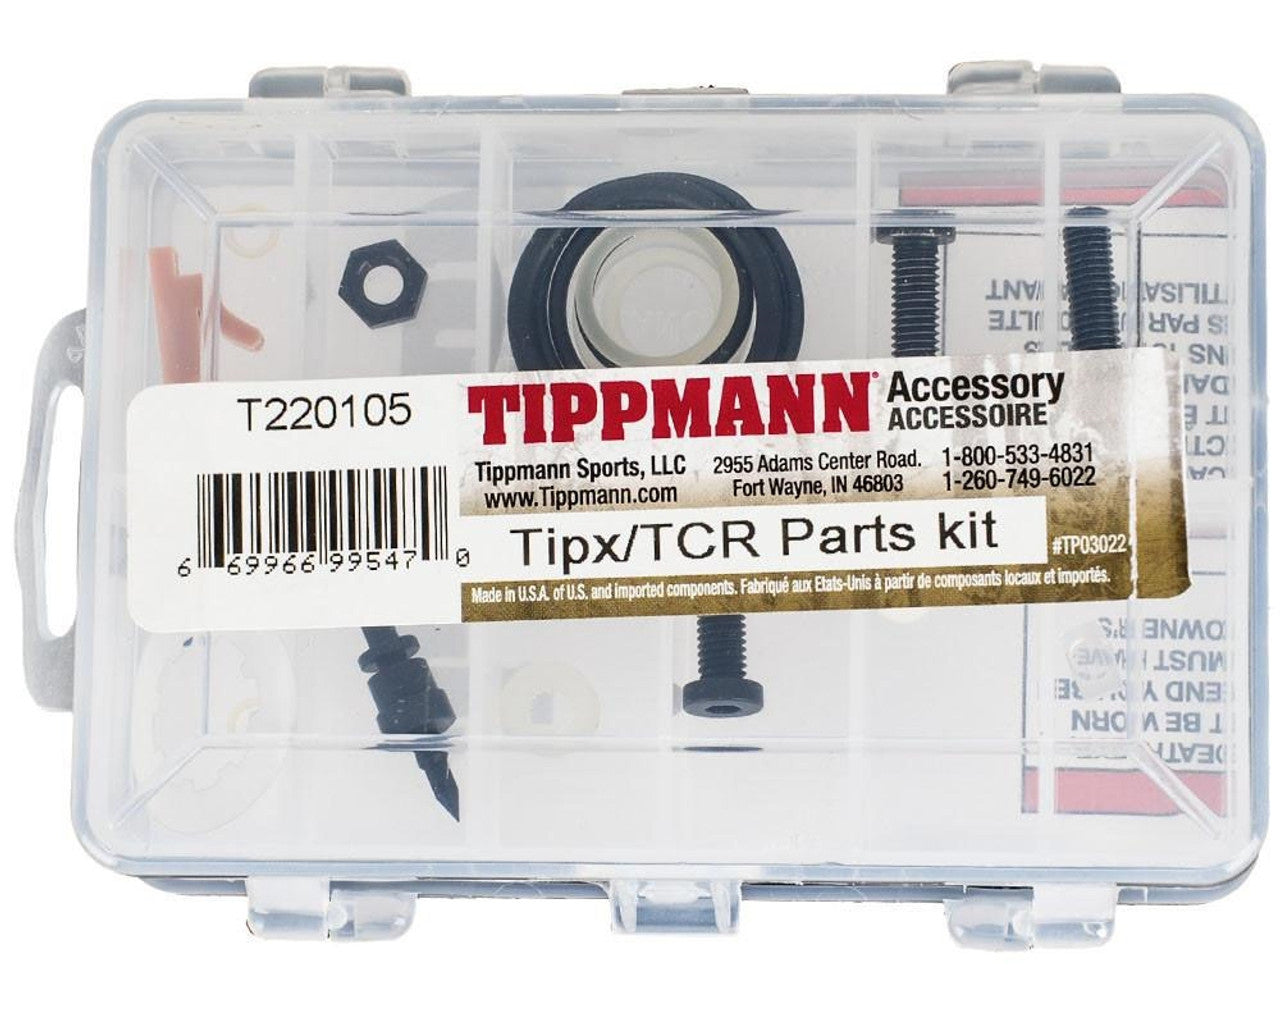 Tippmann Tipx / Tcr Universal Parts Kit (T220105) | Paintball Marker Parts Kit